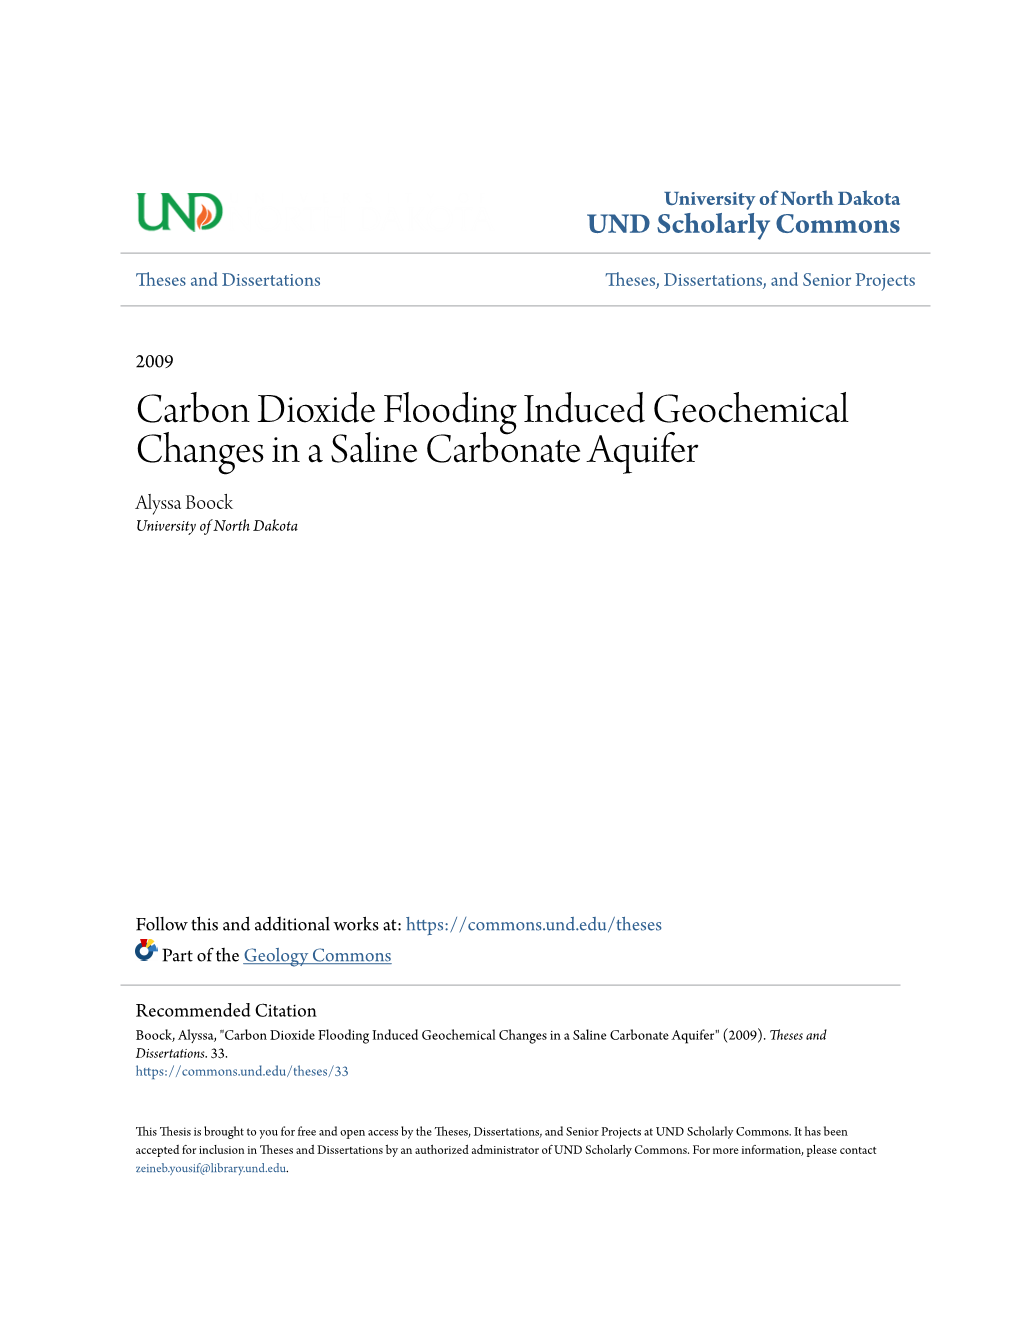 Carbon Dioxide Flooding Induced Geochemical Changes in a Saline Carbonate Aquifer Alyssa Boock University of North Dakota